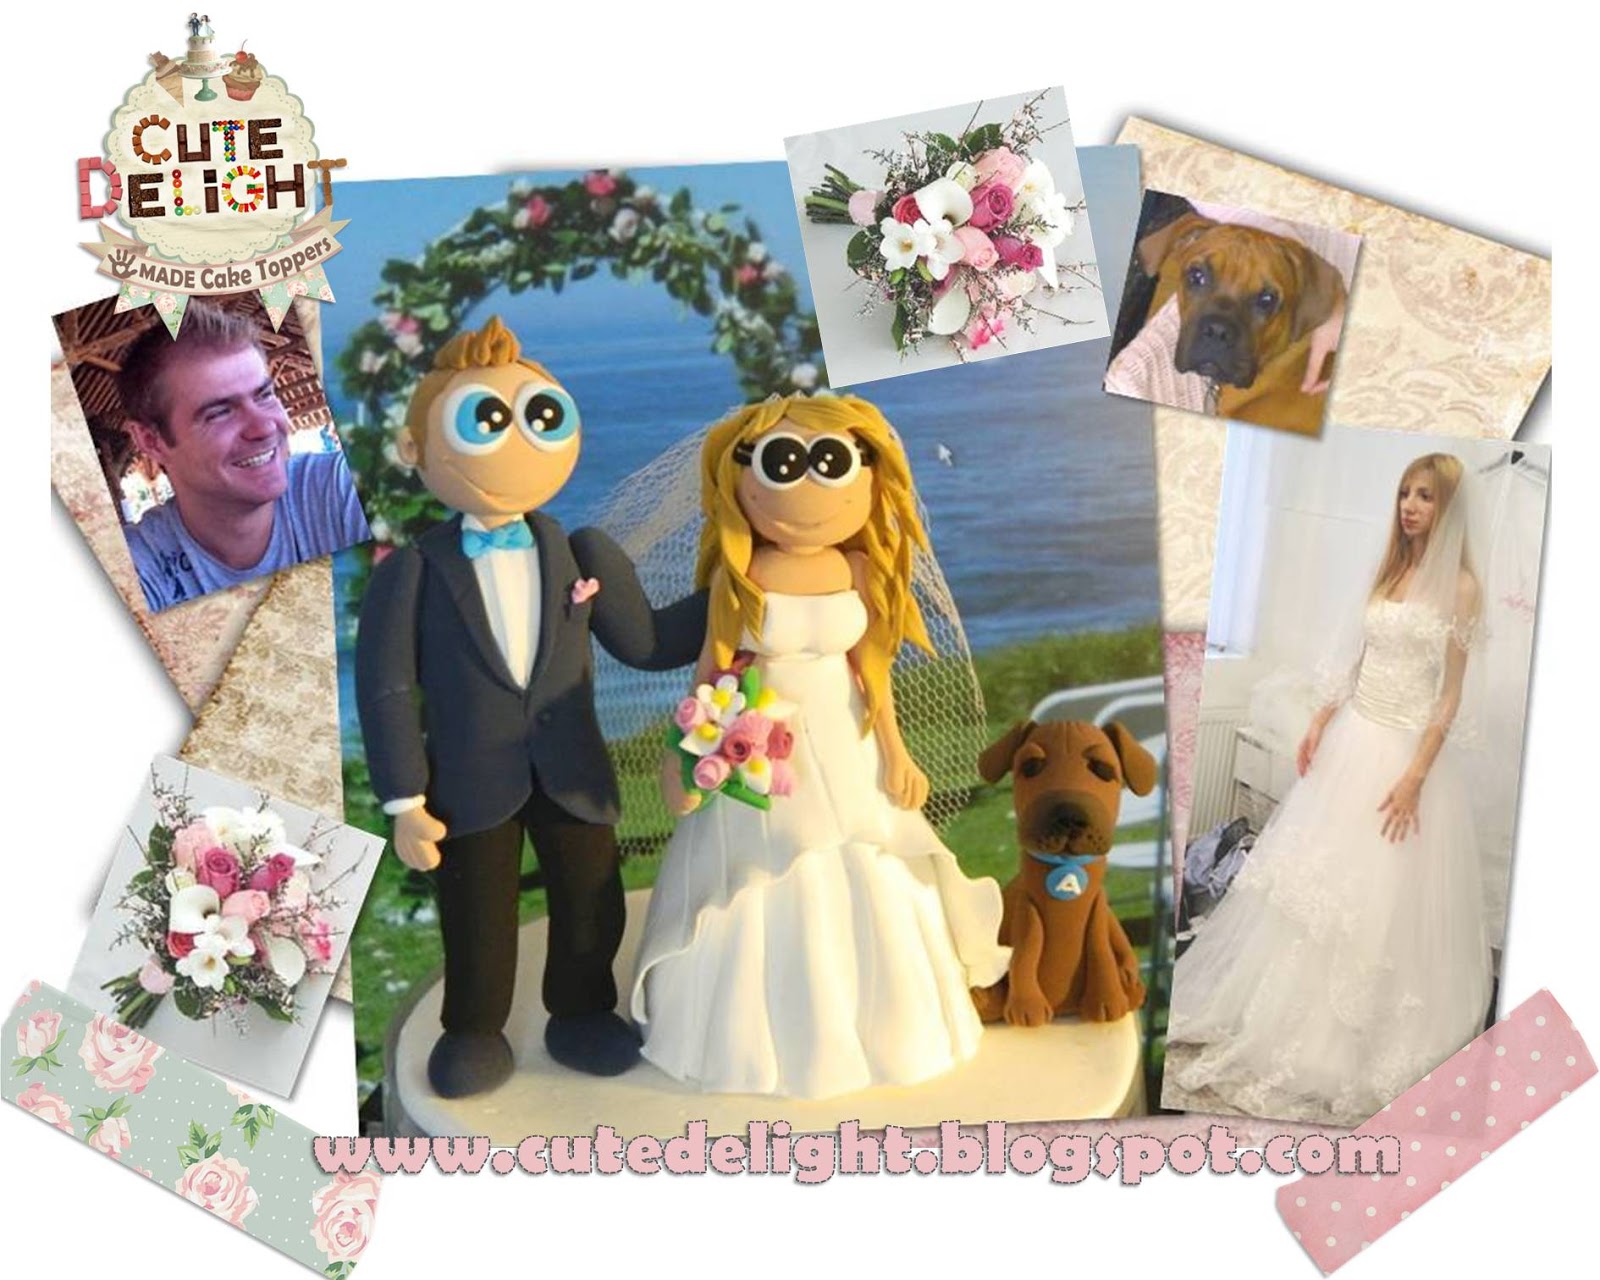 unique wedding cake toppers Cute Delight - Custom Handmade Wedding Cake Topper - Bride, Groom and 